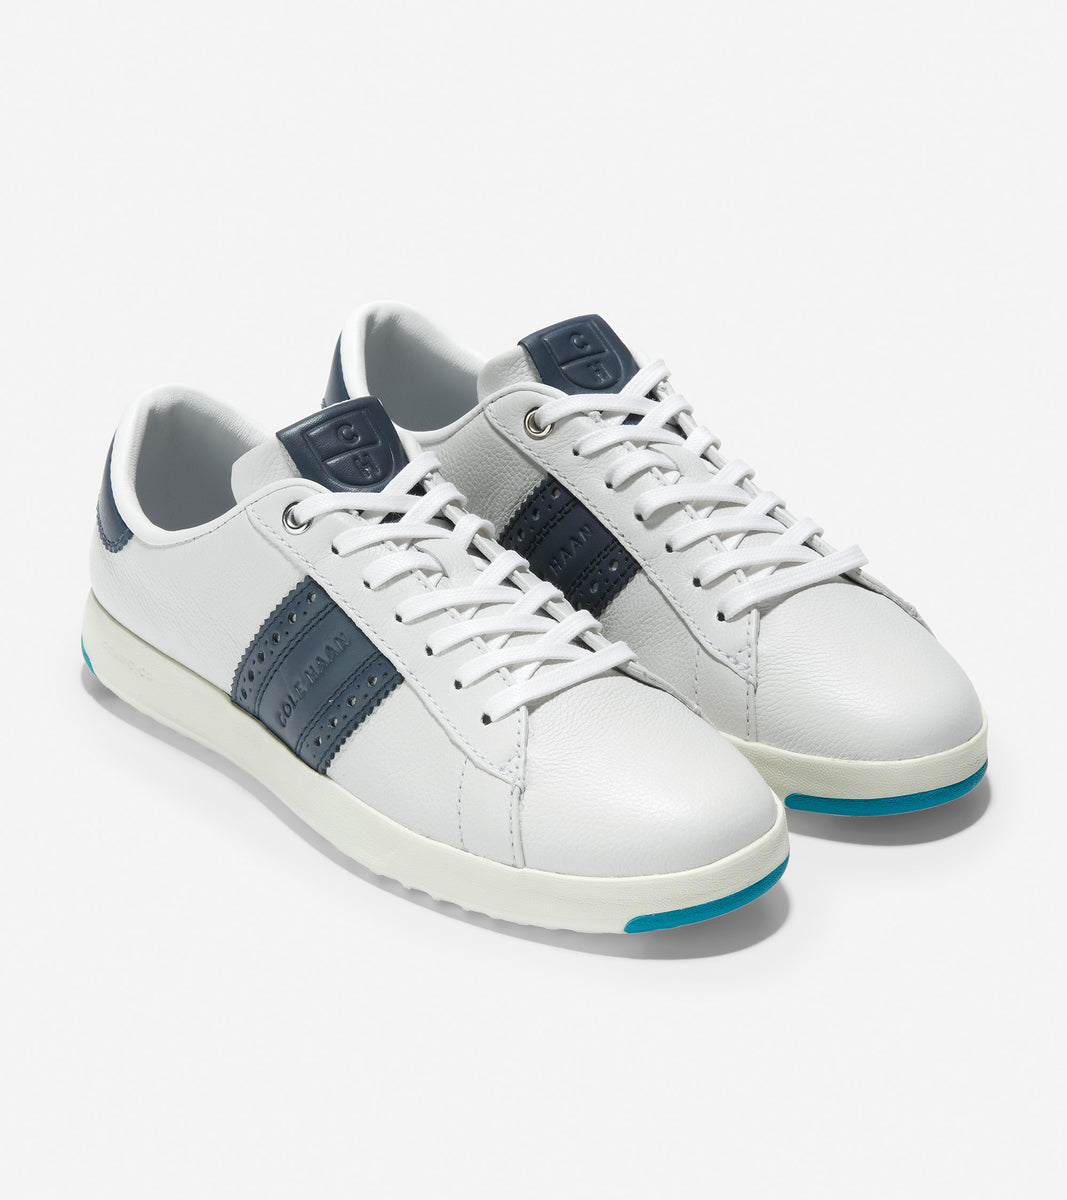 ColeHaan-GrandPrø Tennis Sneaker-w21493-Ivory Leather-Vintage Blue